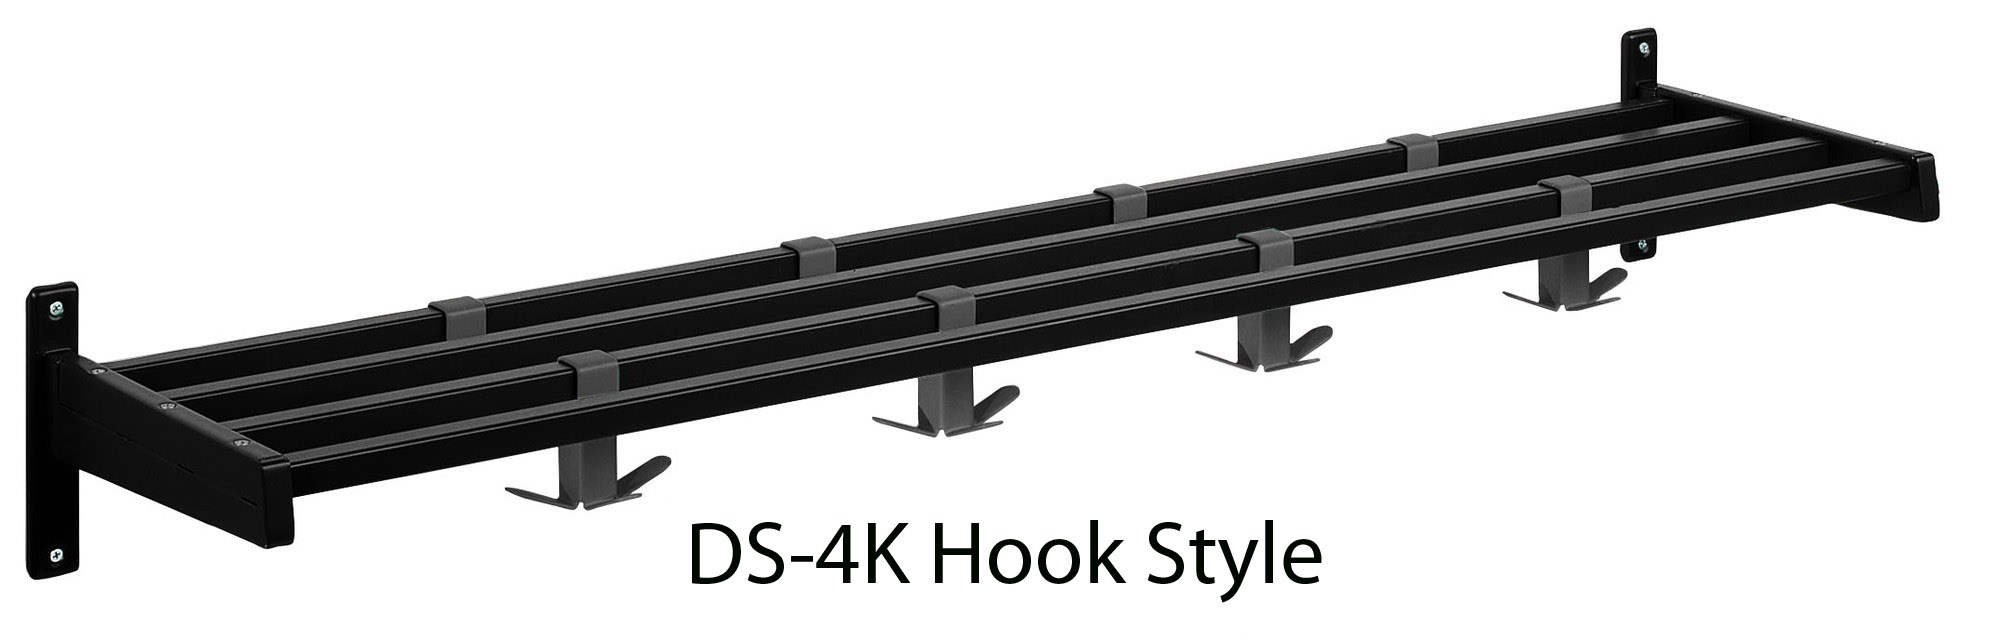 DS-4K Hook Style